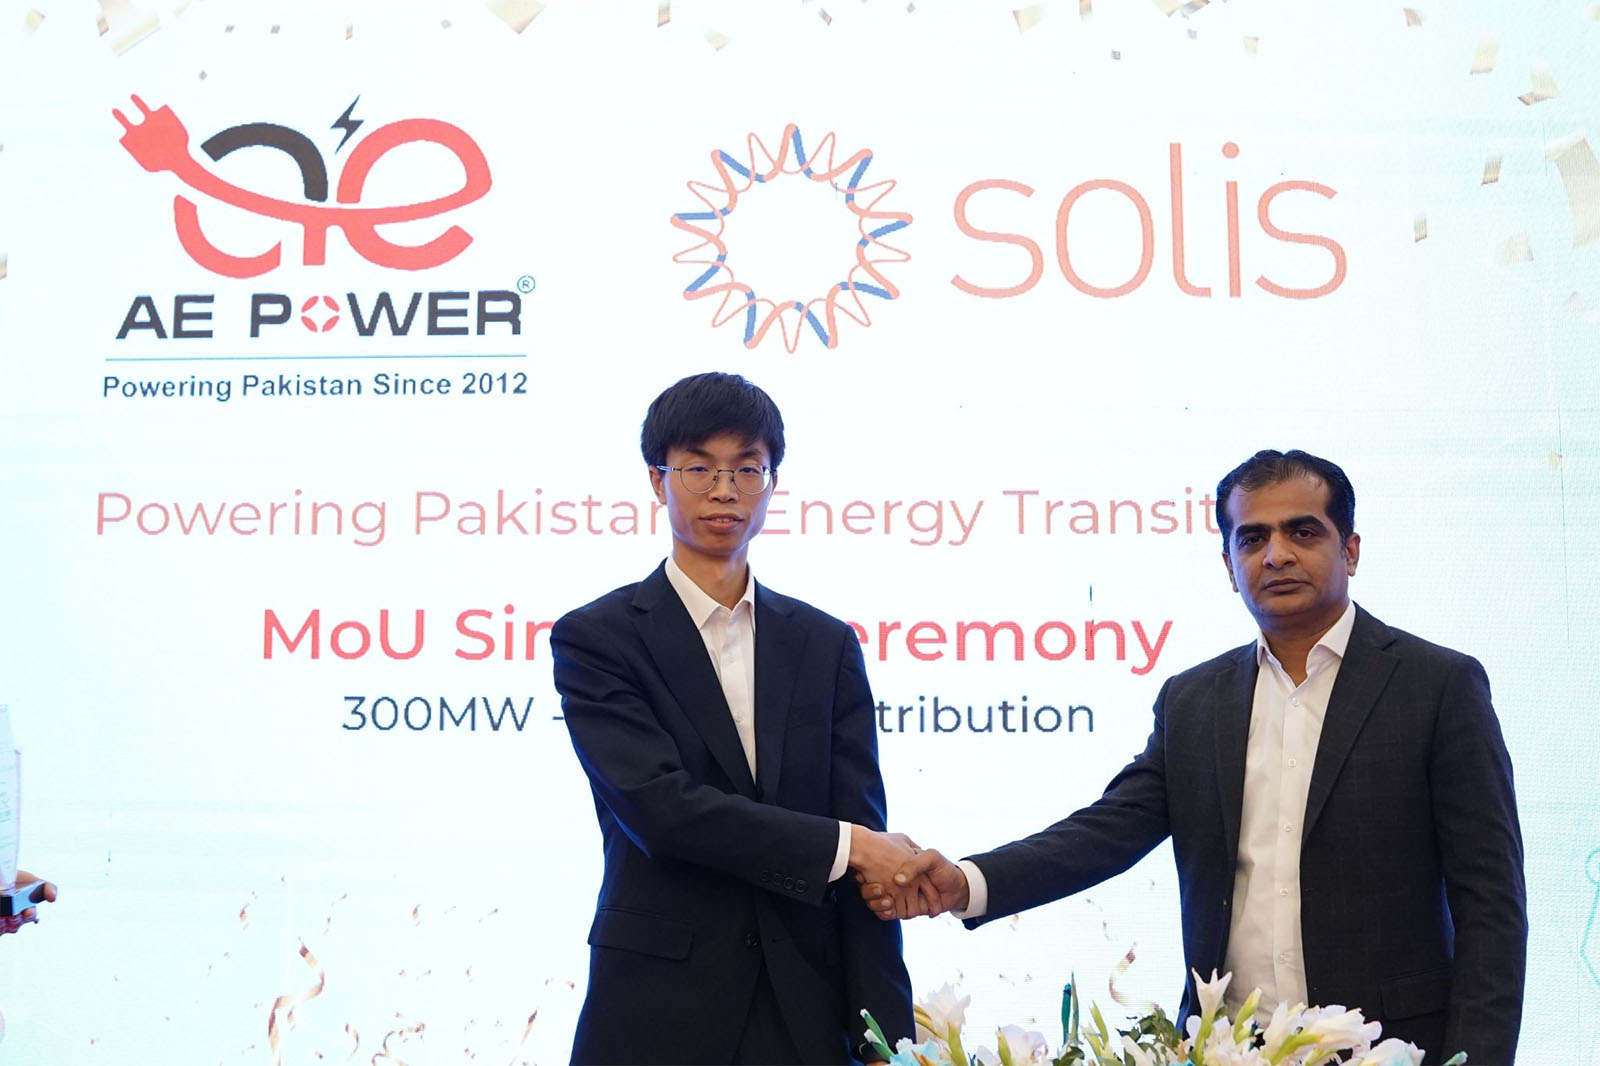 Solis نے پاکستان کے توانائی کے شعبے کو تبدیل کرنے کے لیے AE پاور کے ساتھ 300 میگاواٹ کی ڈسٹری بیوشن ڈیل کے ساتھ ایک پائیدار منصوبے کا آغاز کیا ہے